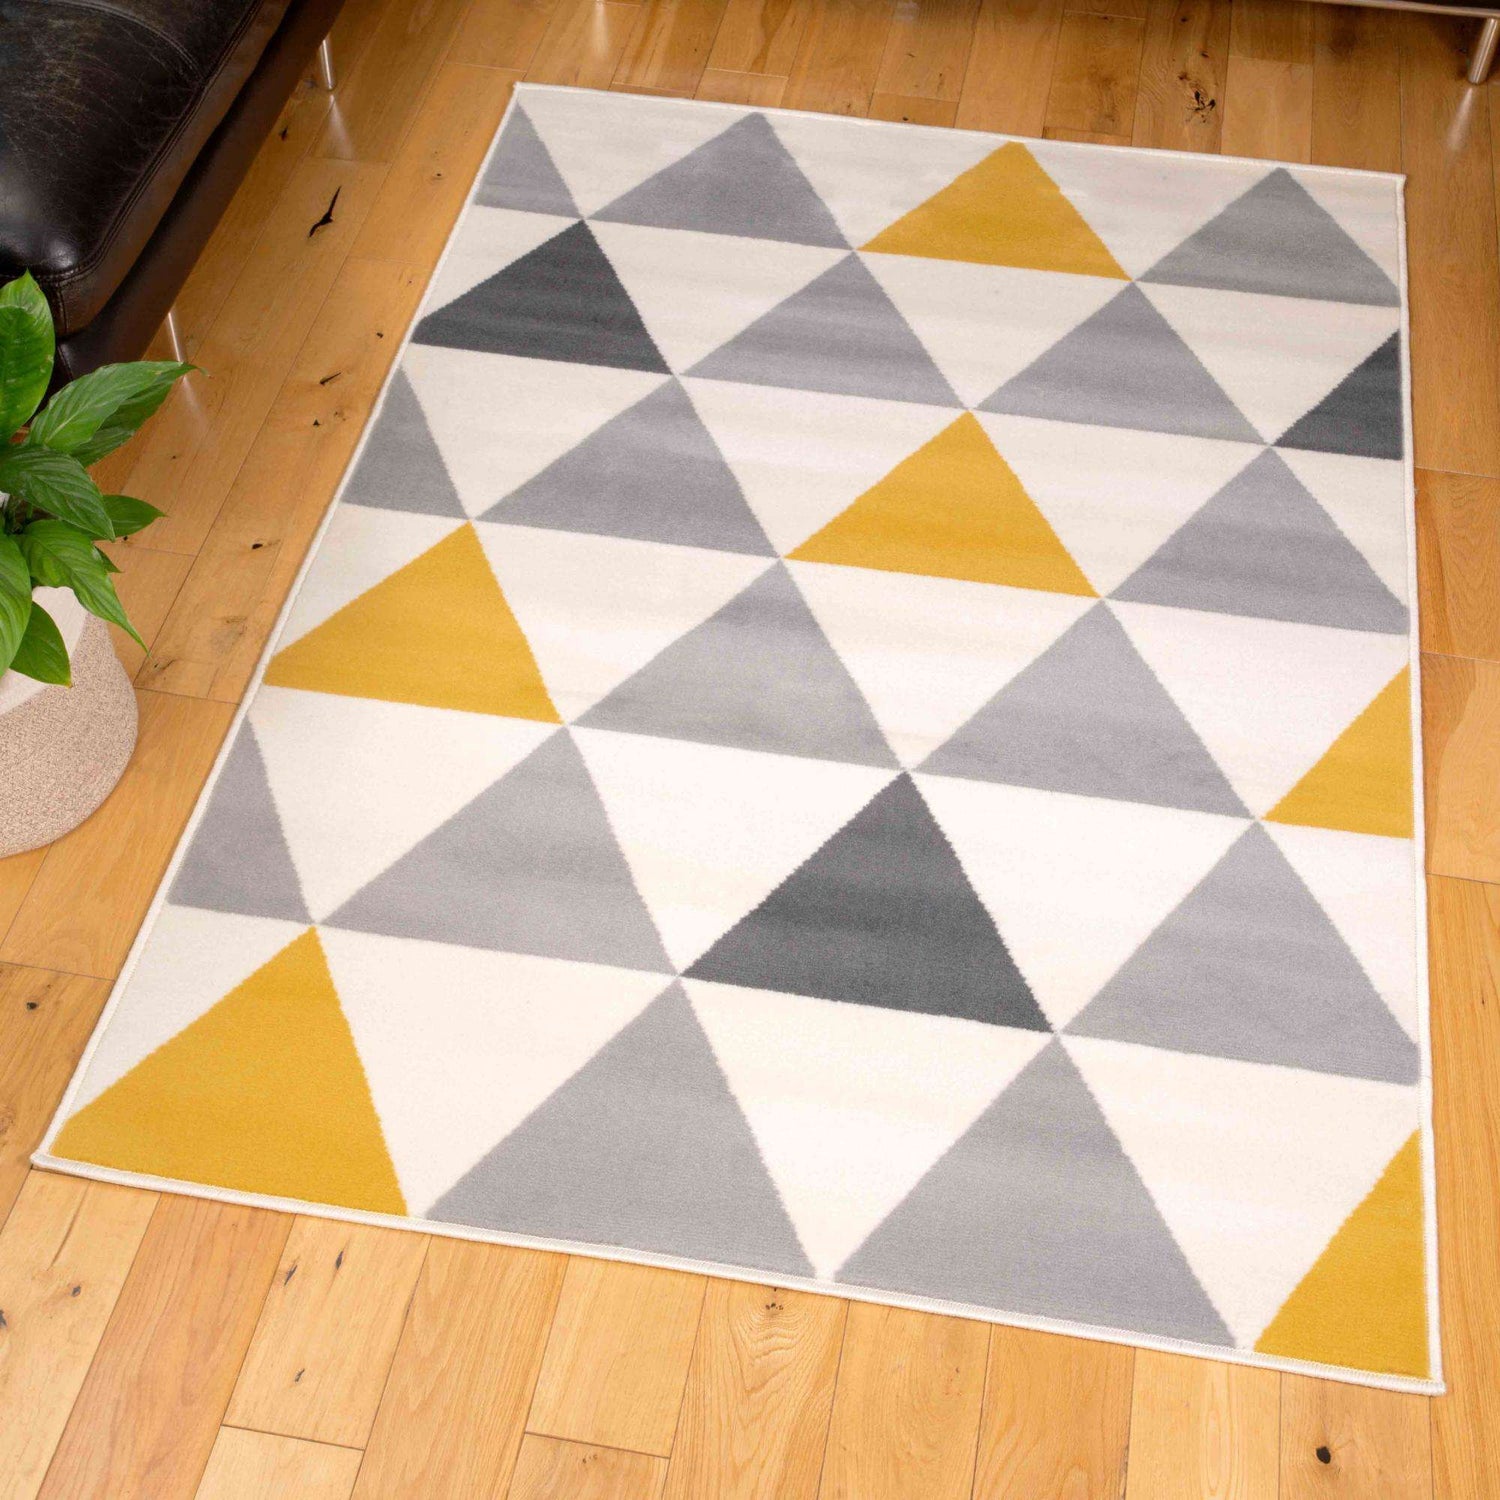 Yellow Grey Geometric Triangle Bedroom Rug